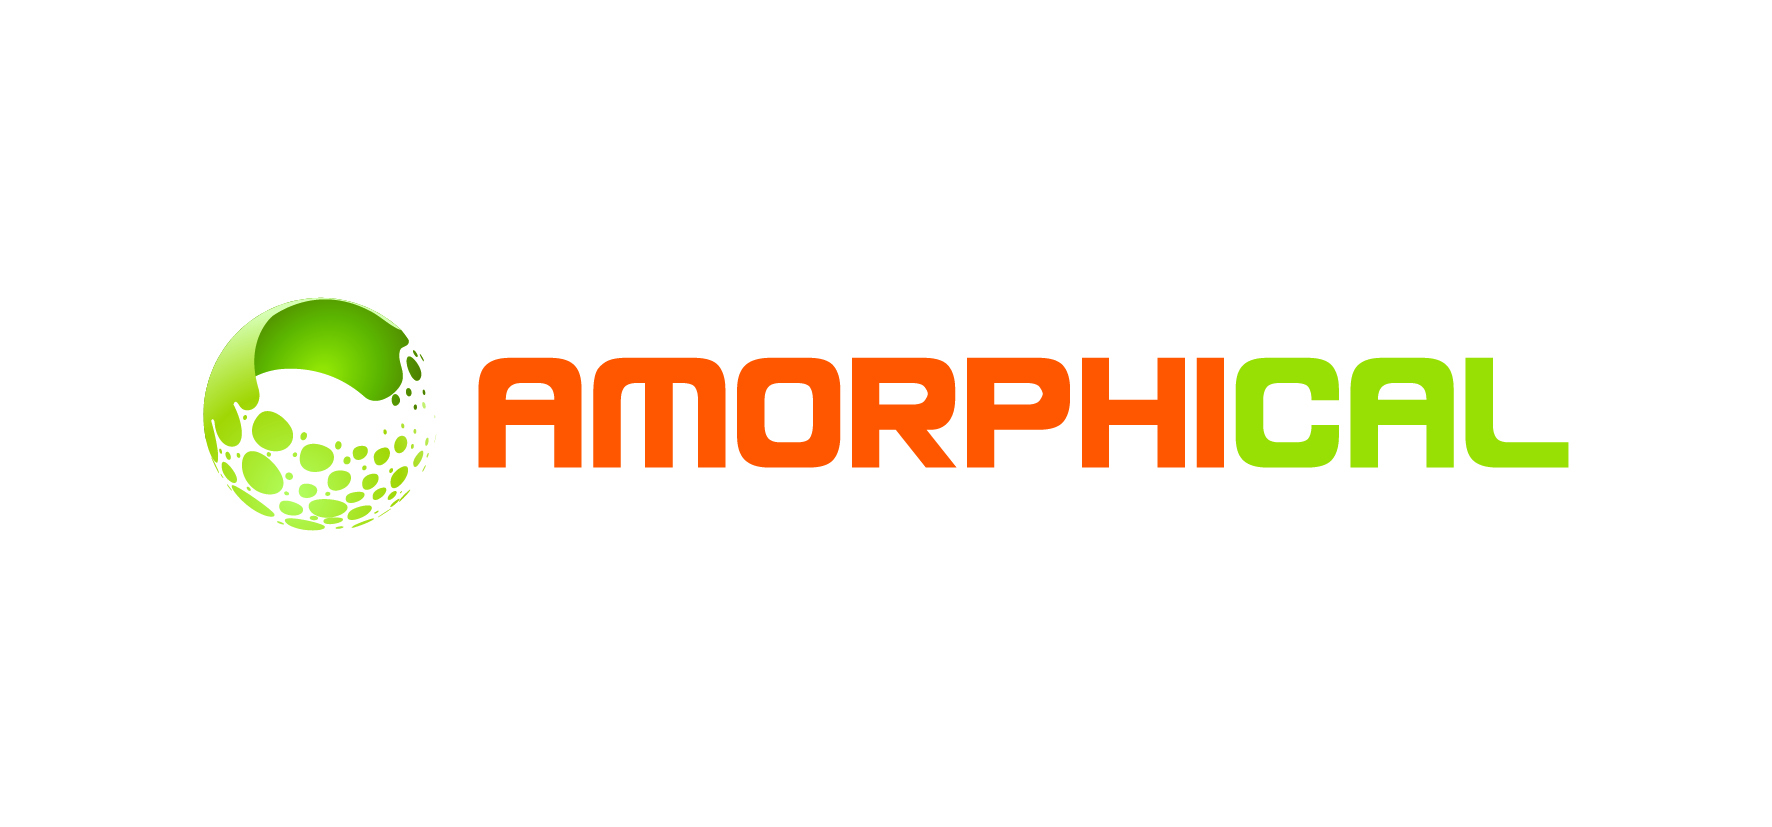 Amorphical logo